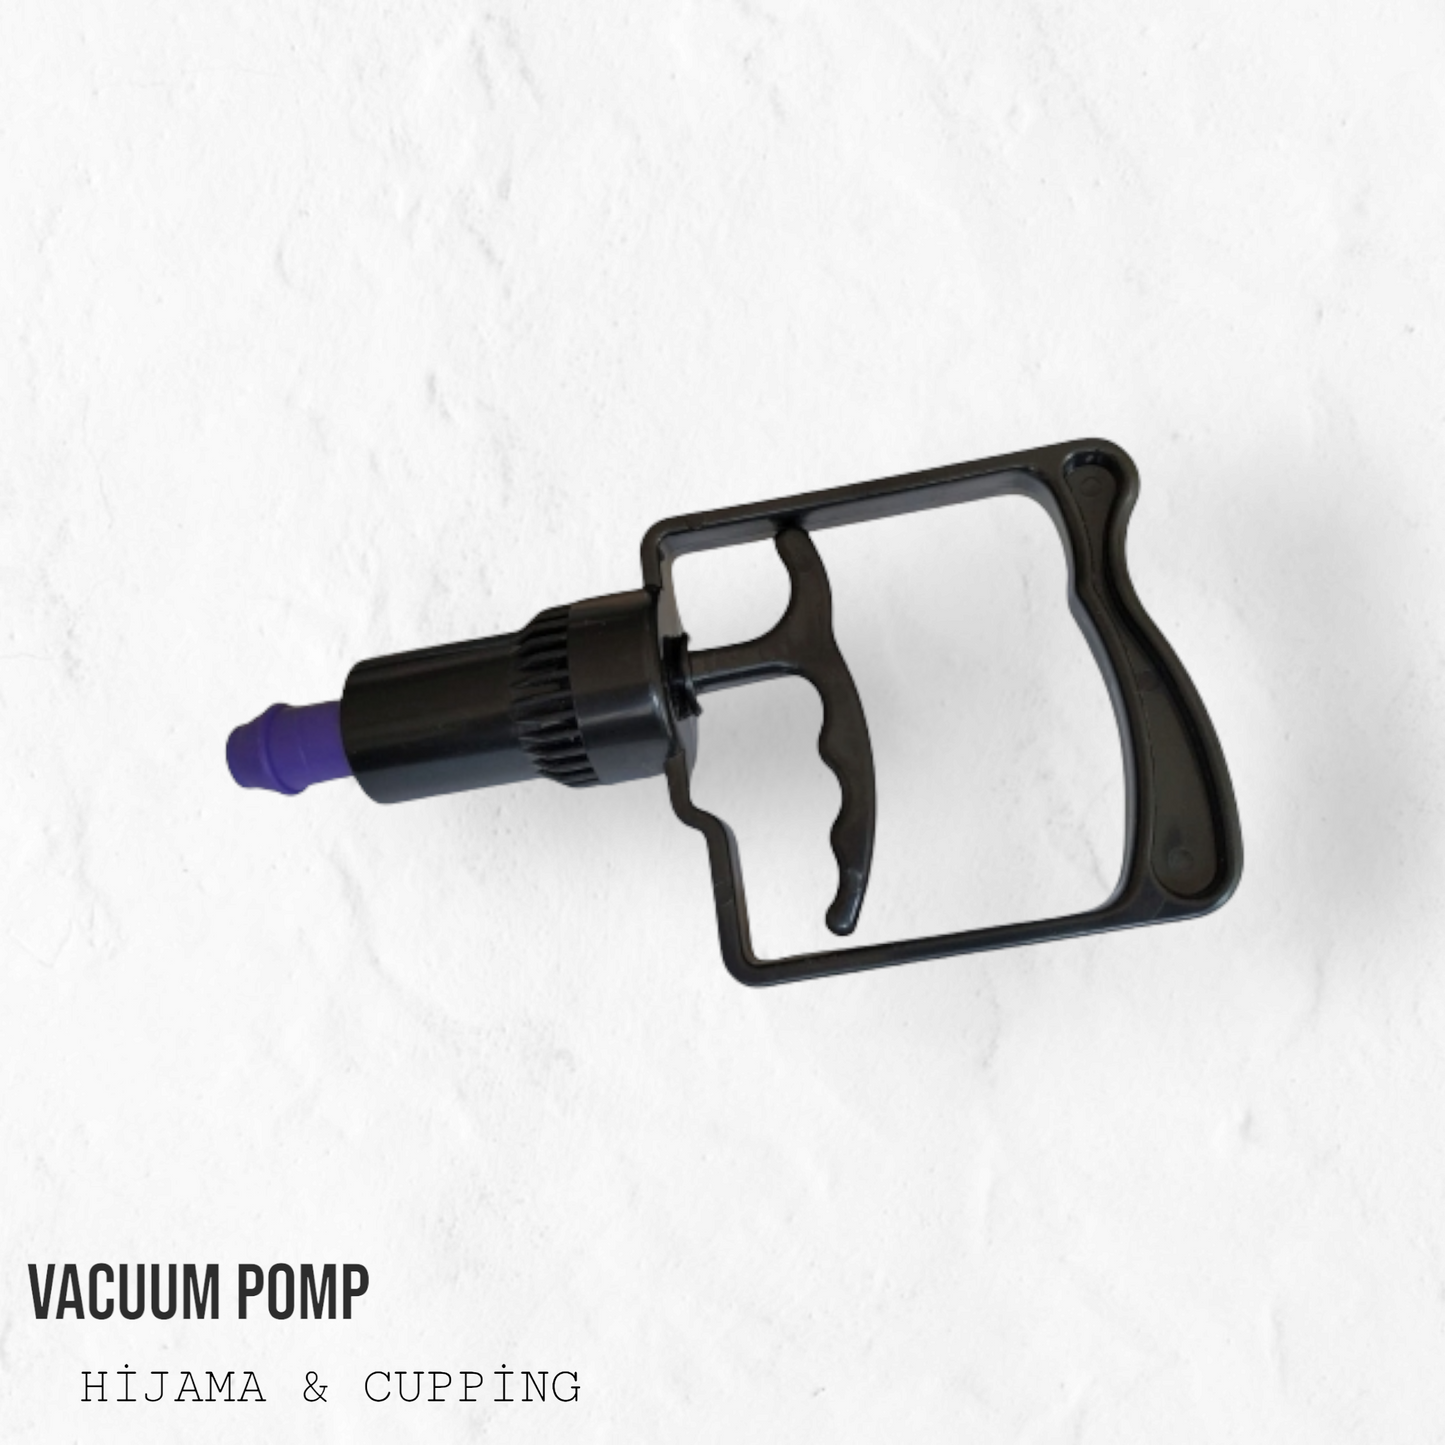 Hijama & Cupping Vacuum Pomp – Big